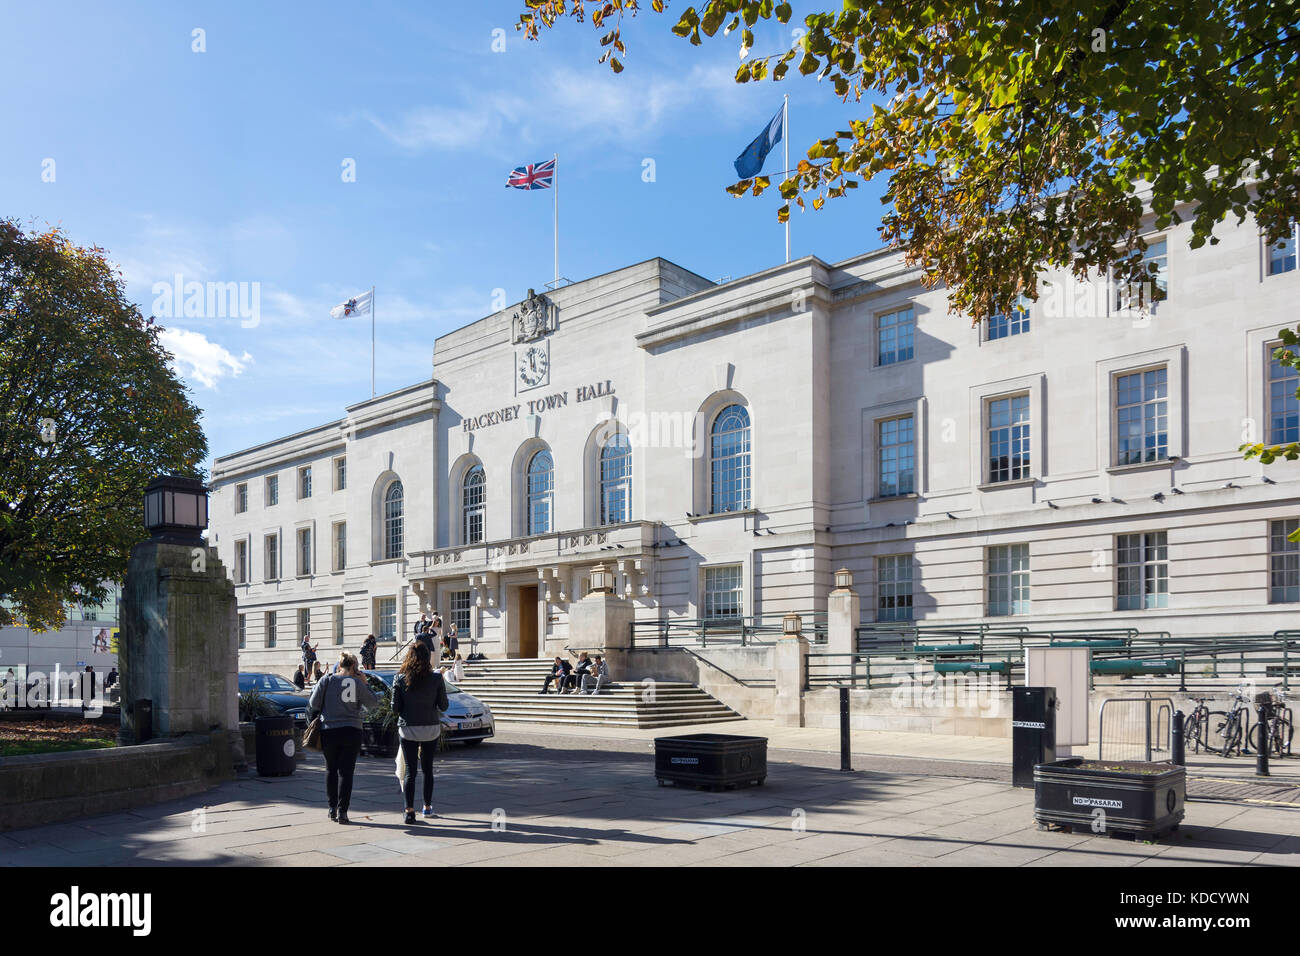 Hackney Town Hall, Mare Street, Hackney Central, London Borough of Hackney, Greater London, England, United Kingdom Stock Photo